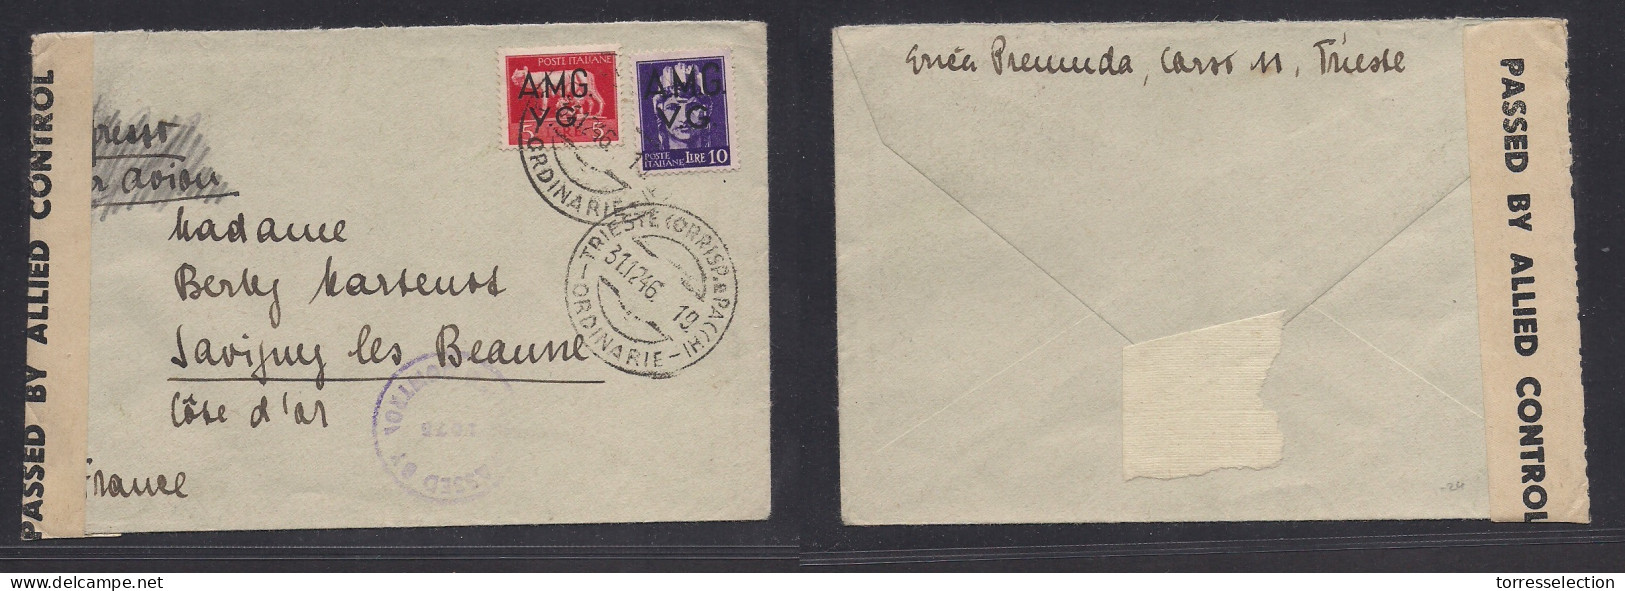 Italy - XX. 1946 (31 Dec) AMG. VG. Trieste - France, Savigny. Multifkd Allied Censored Envelope. XSALE. - Non Classés